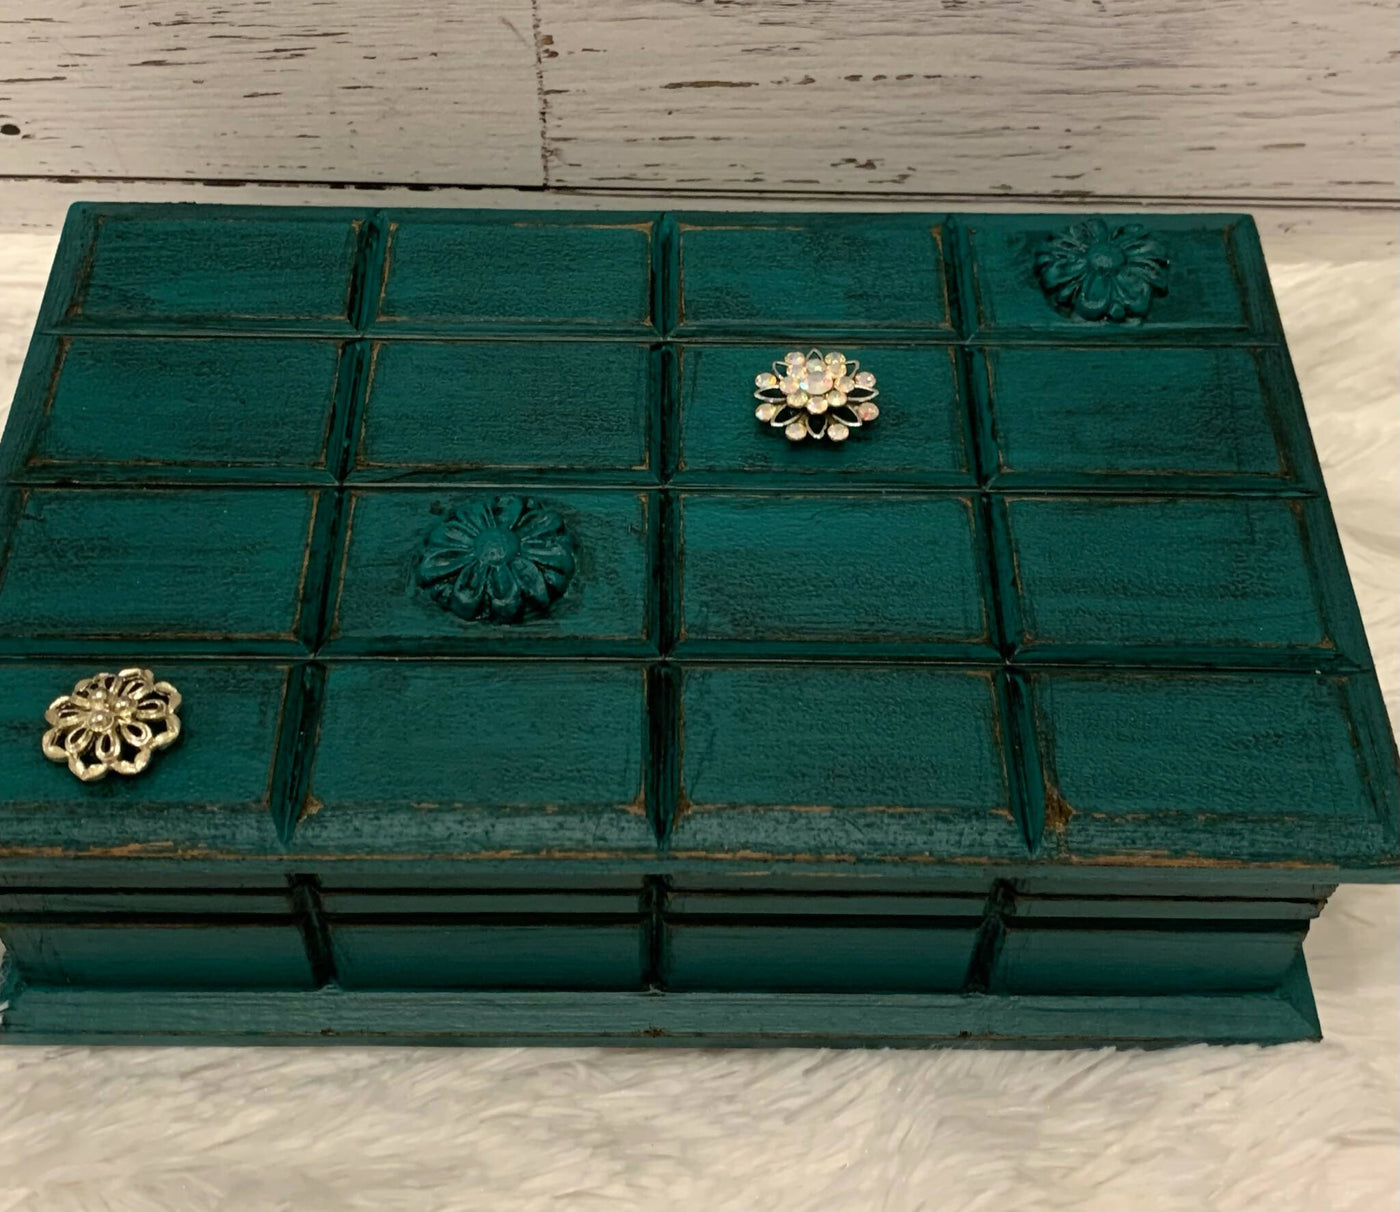 vintage jewelry box